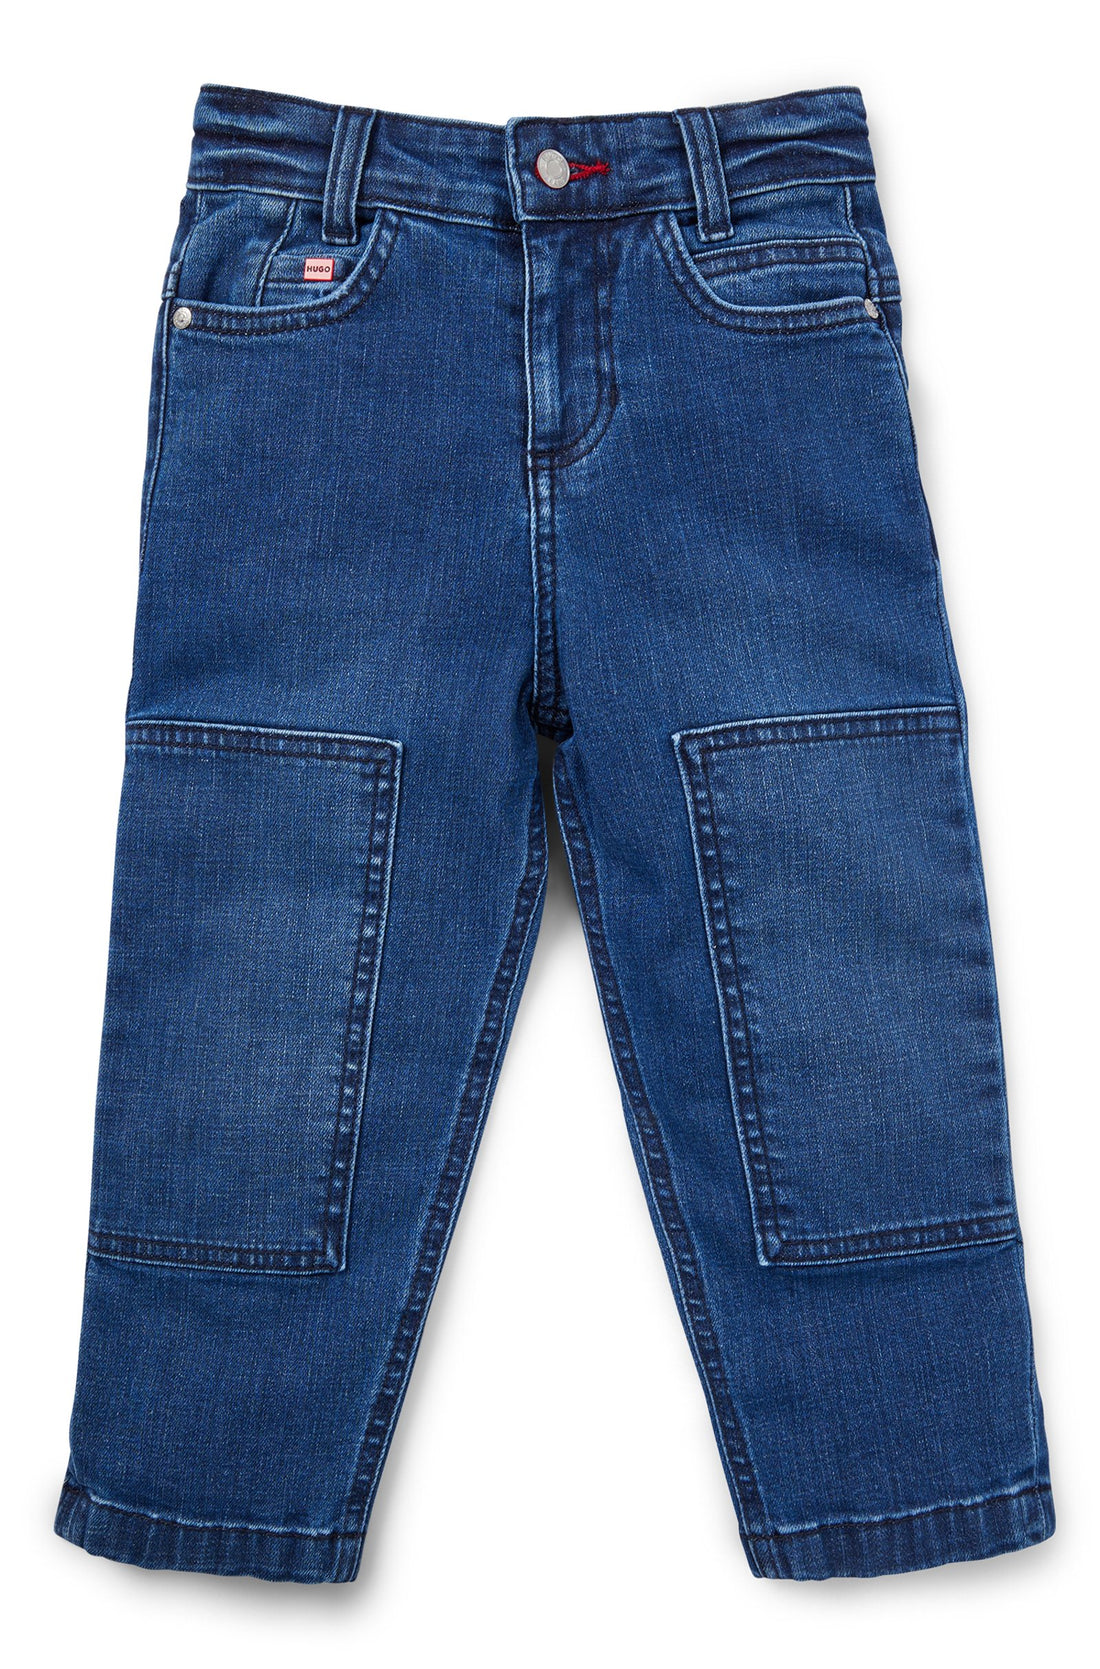 Hugo Denim Trousers Style: G24125